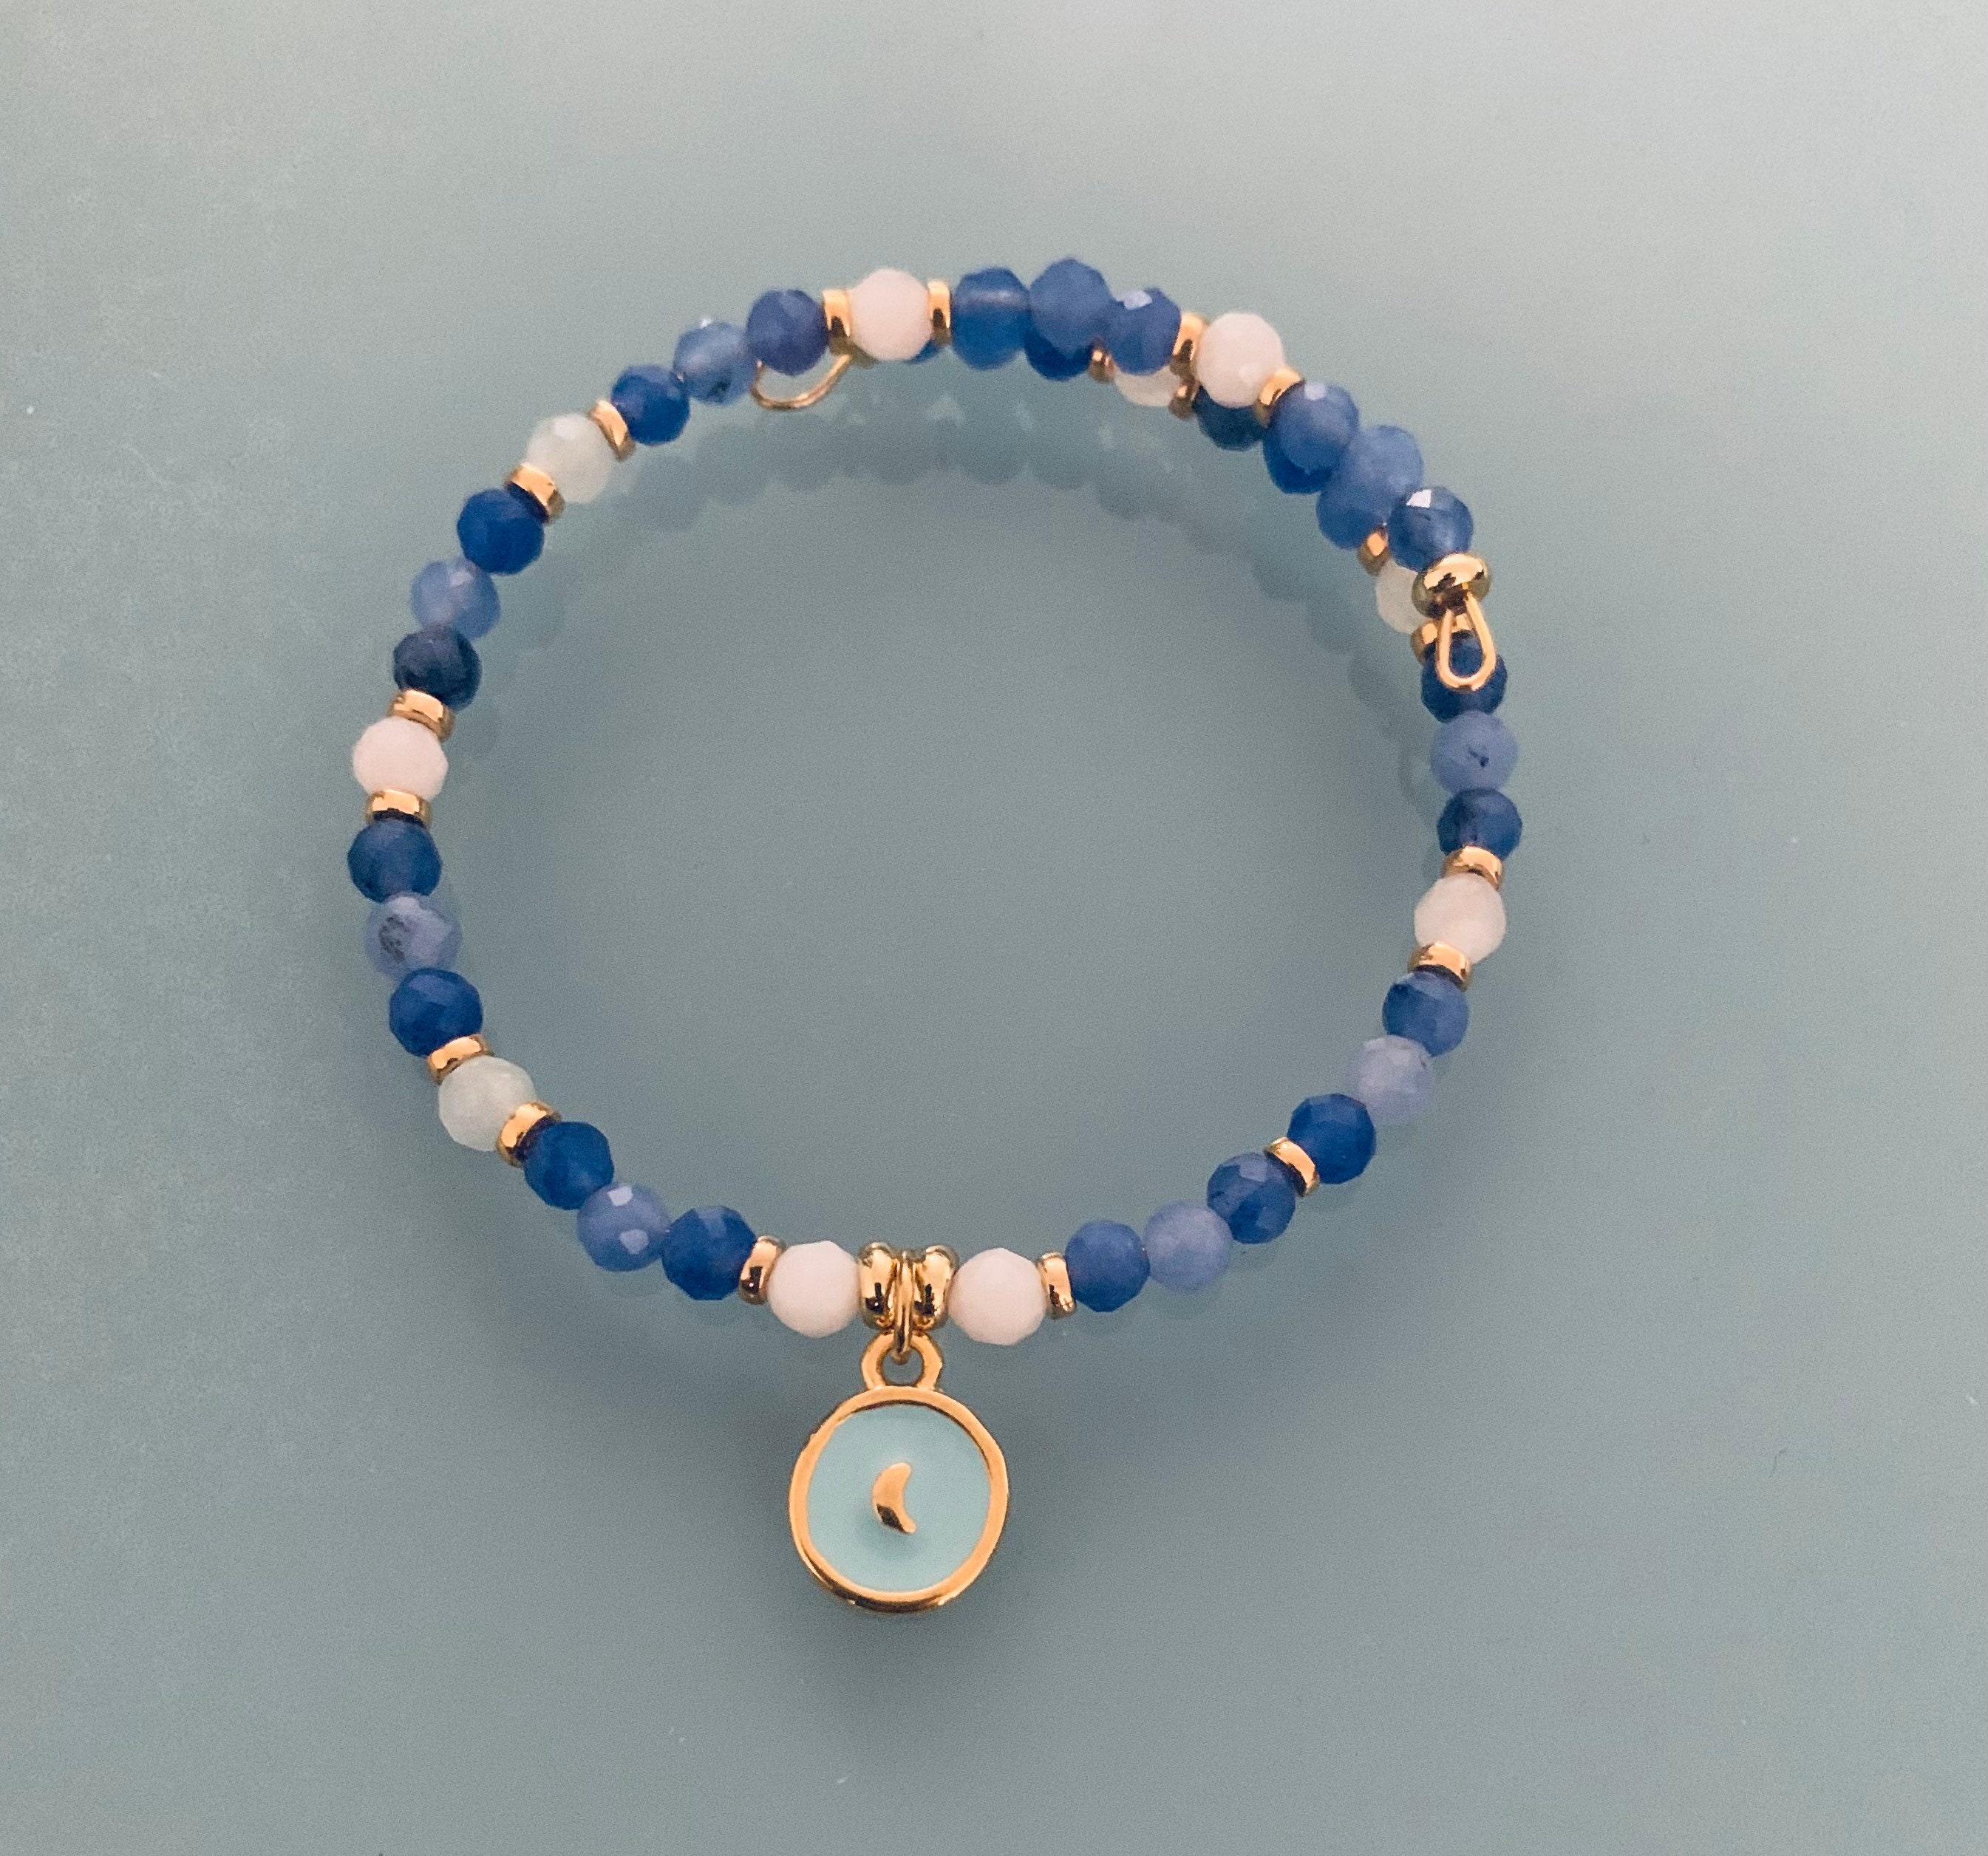 Bracelet en perles bleu nuis, bracelet femme gourmette pierres